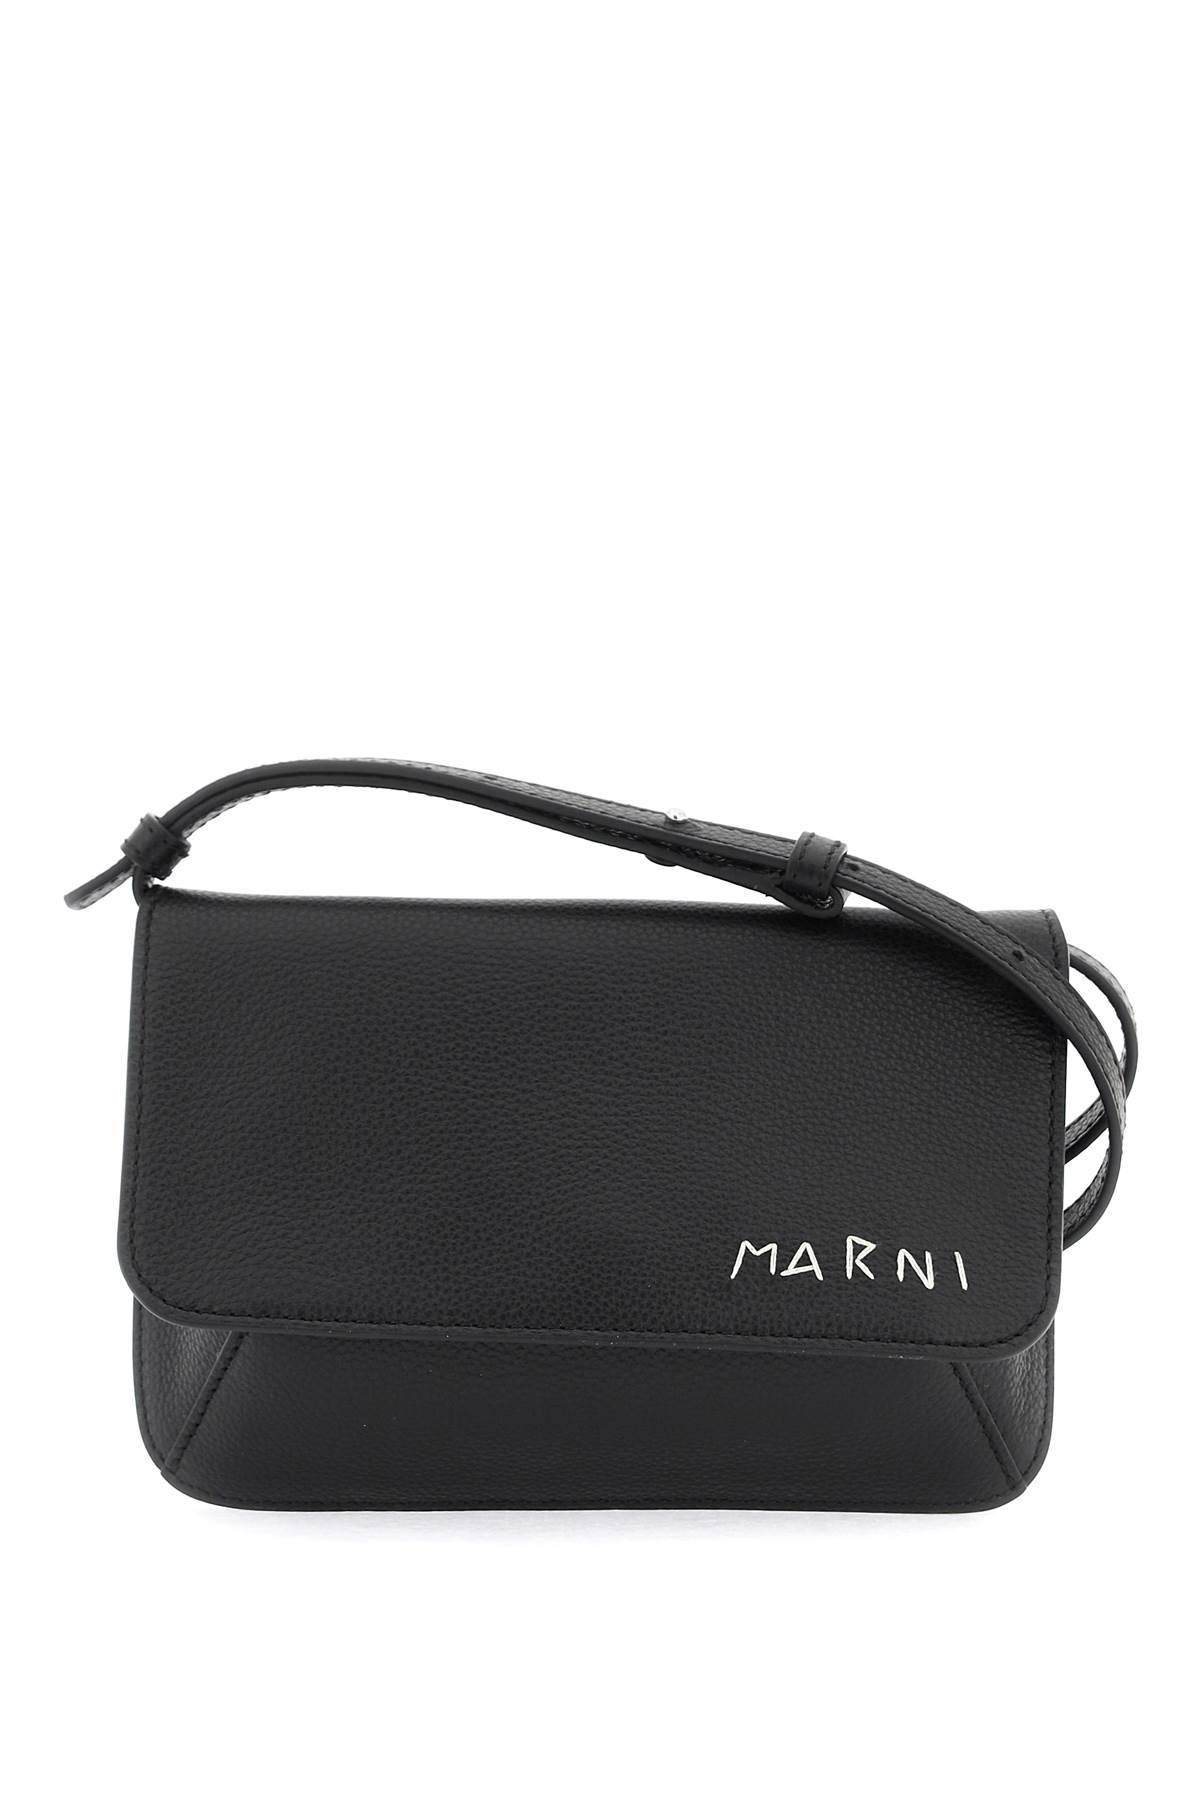 Marni MARNI flap trunk shoulder bag with